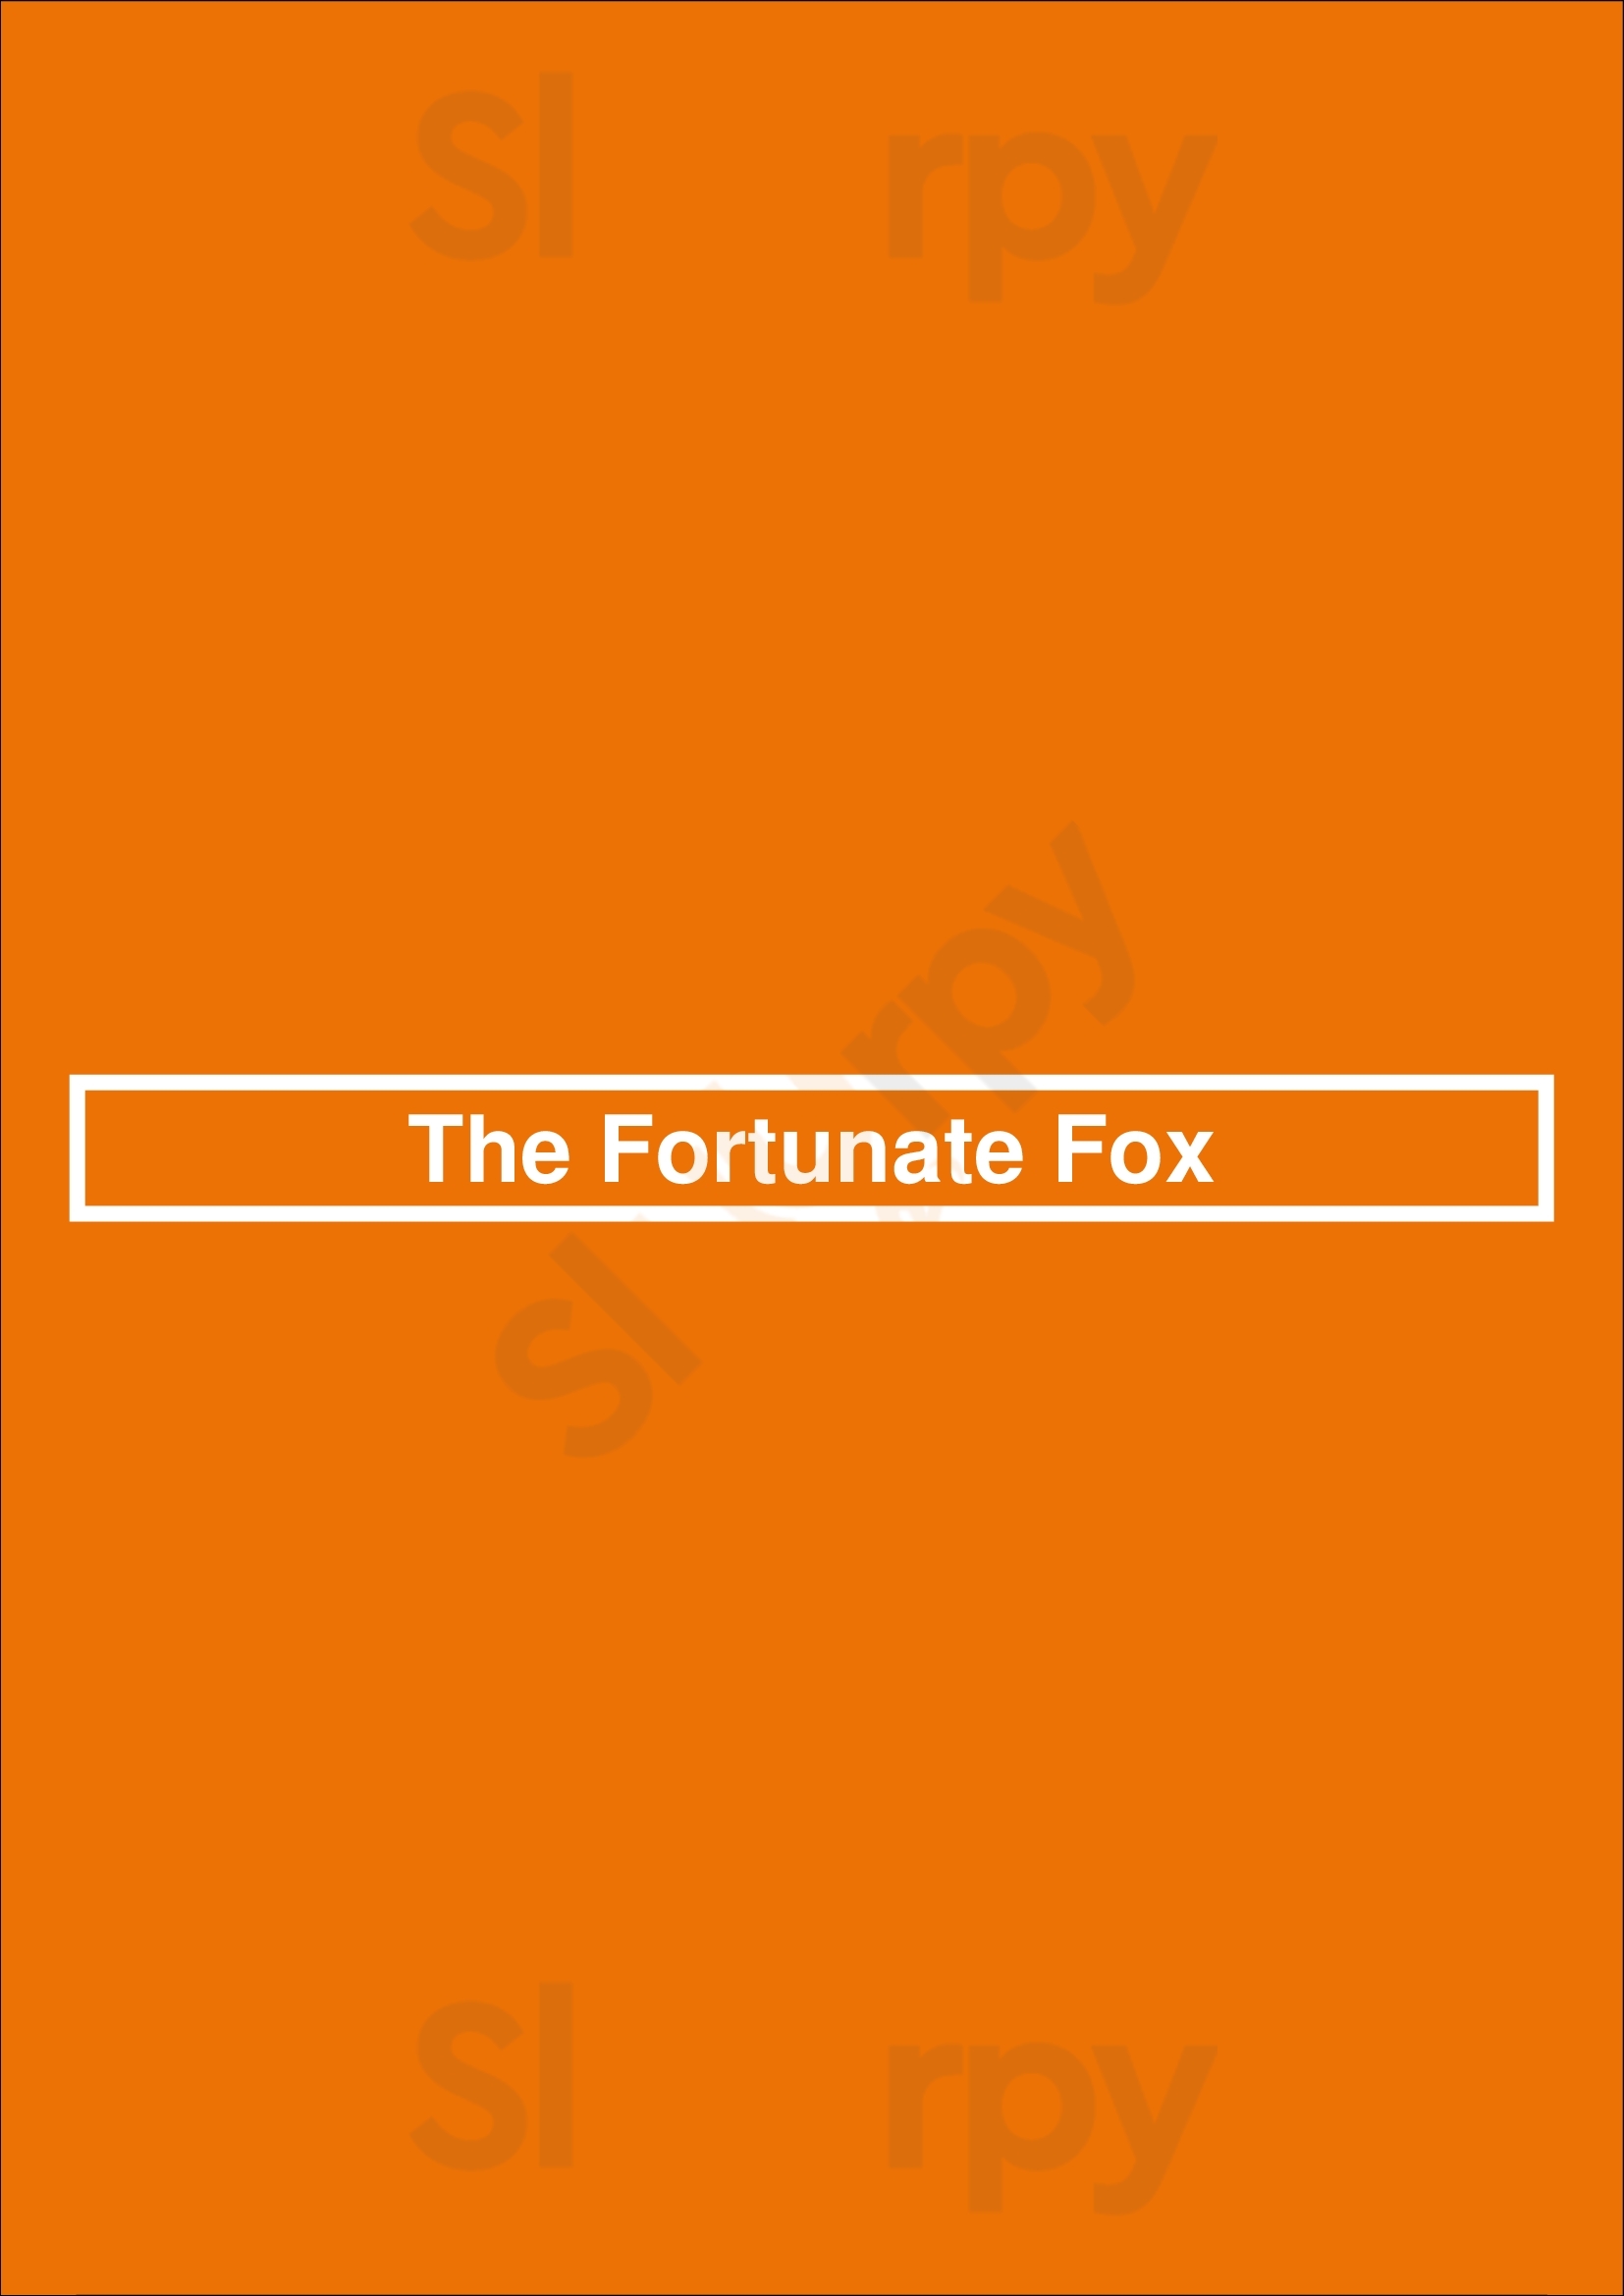 The Fortunate Fox Toronto Menu - 1